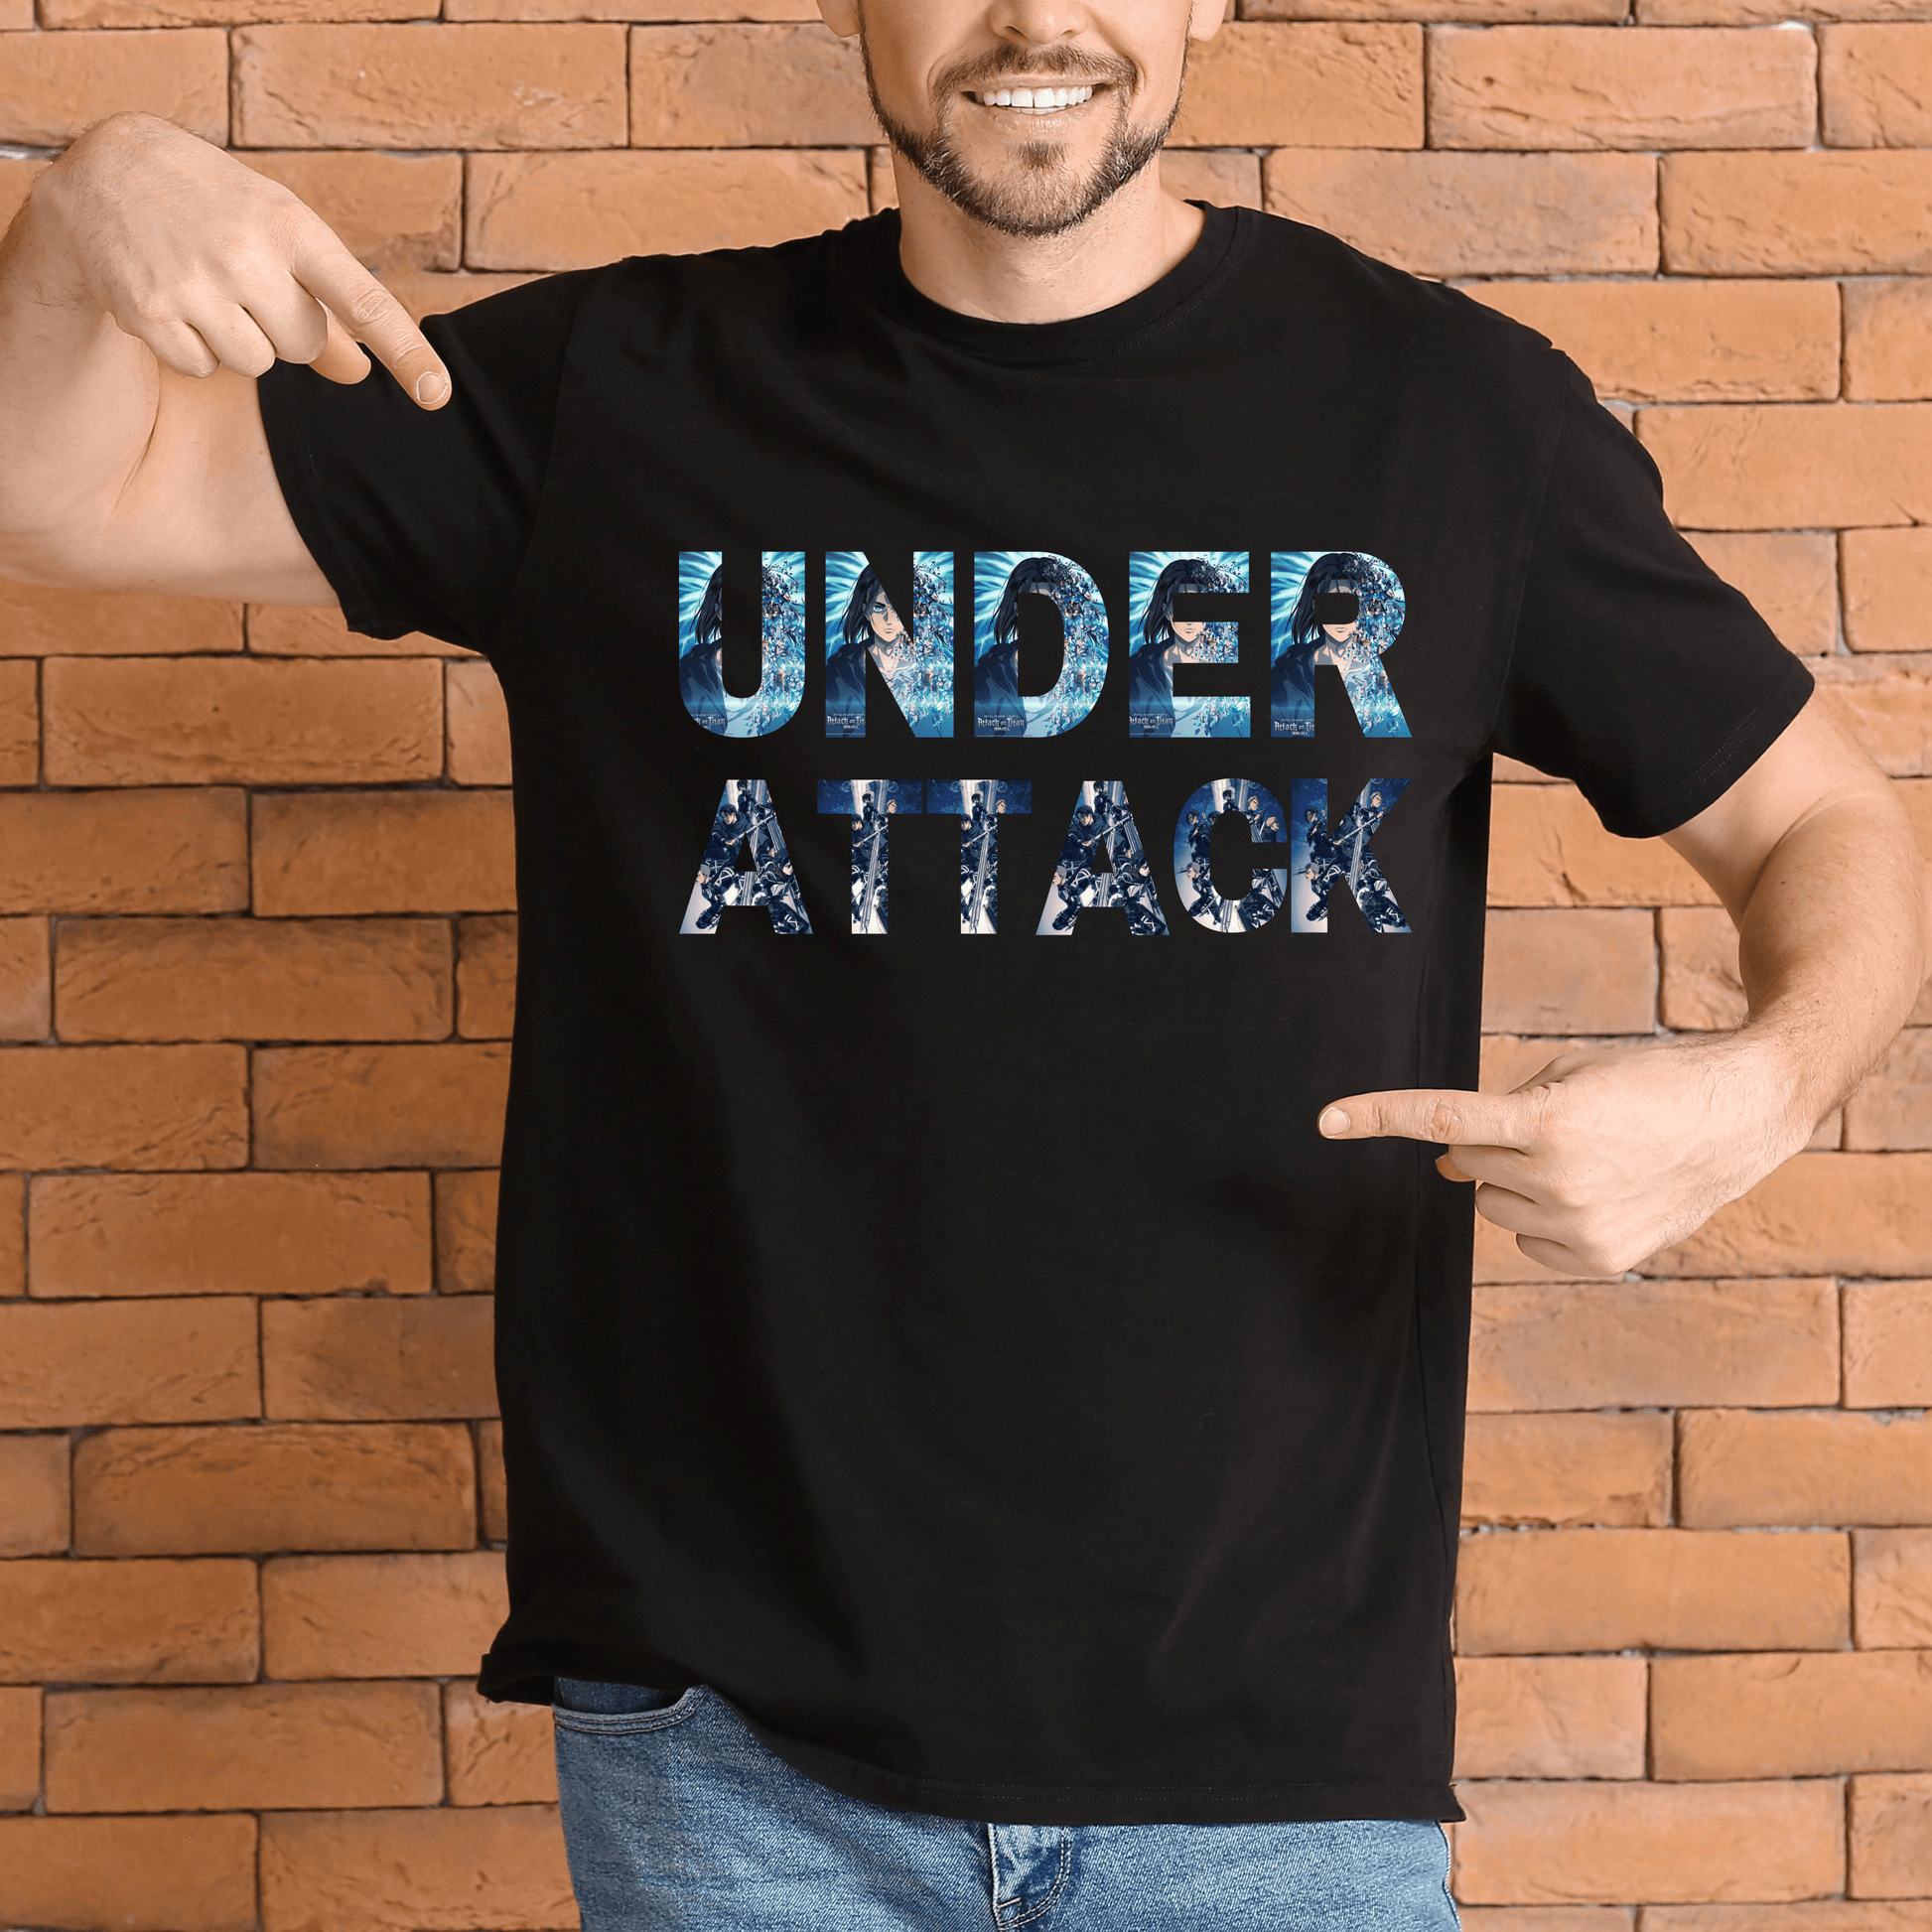 Attack on Titan shirt